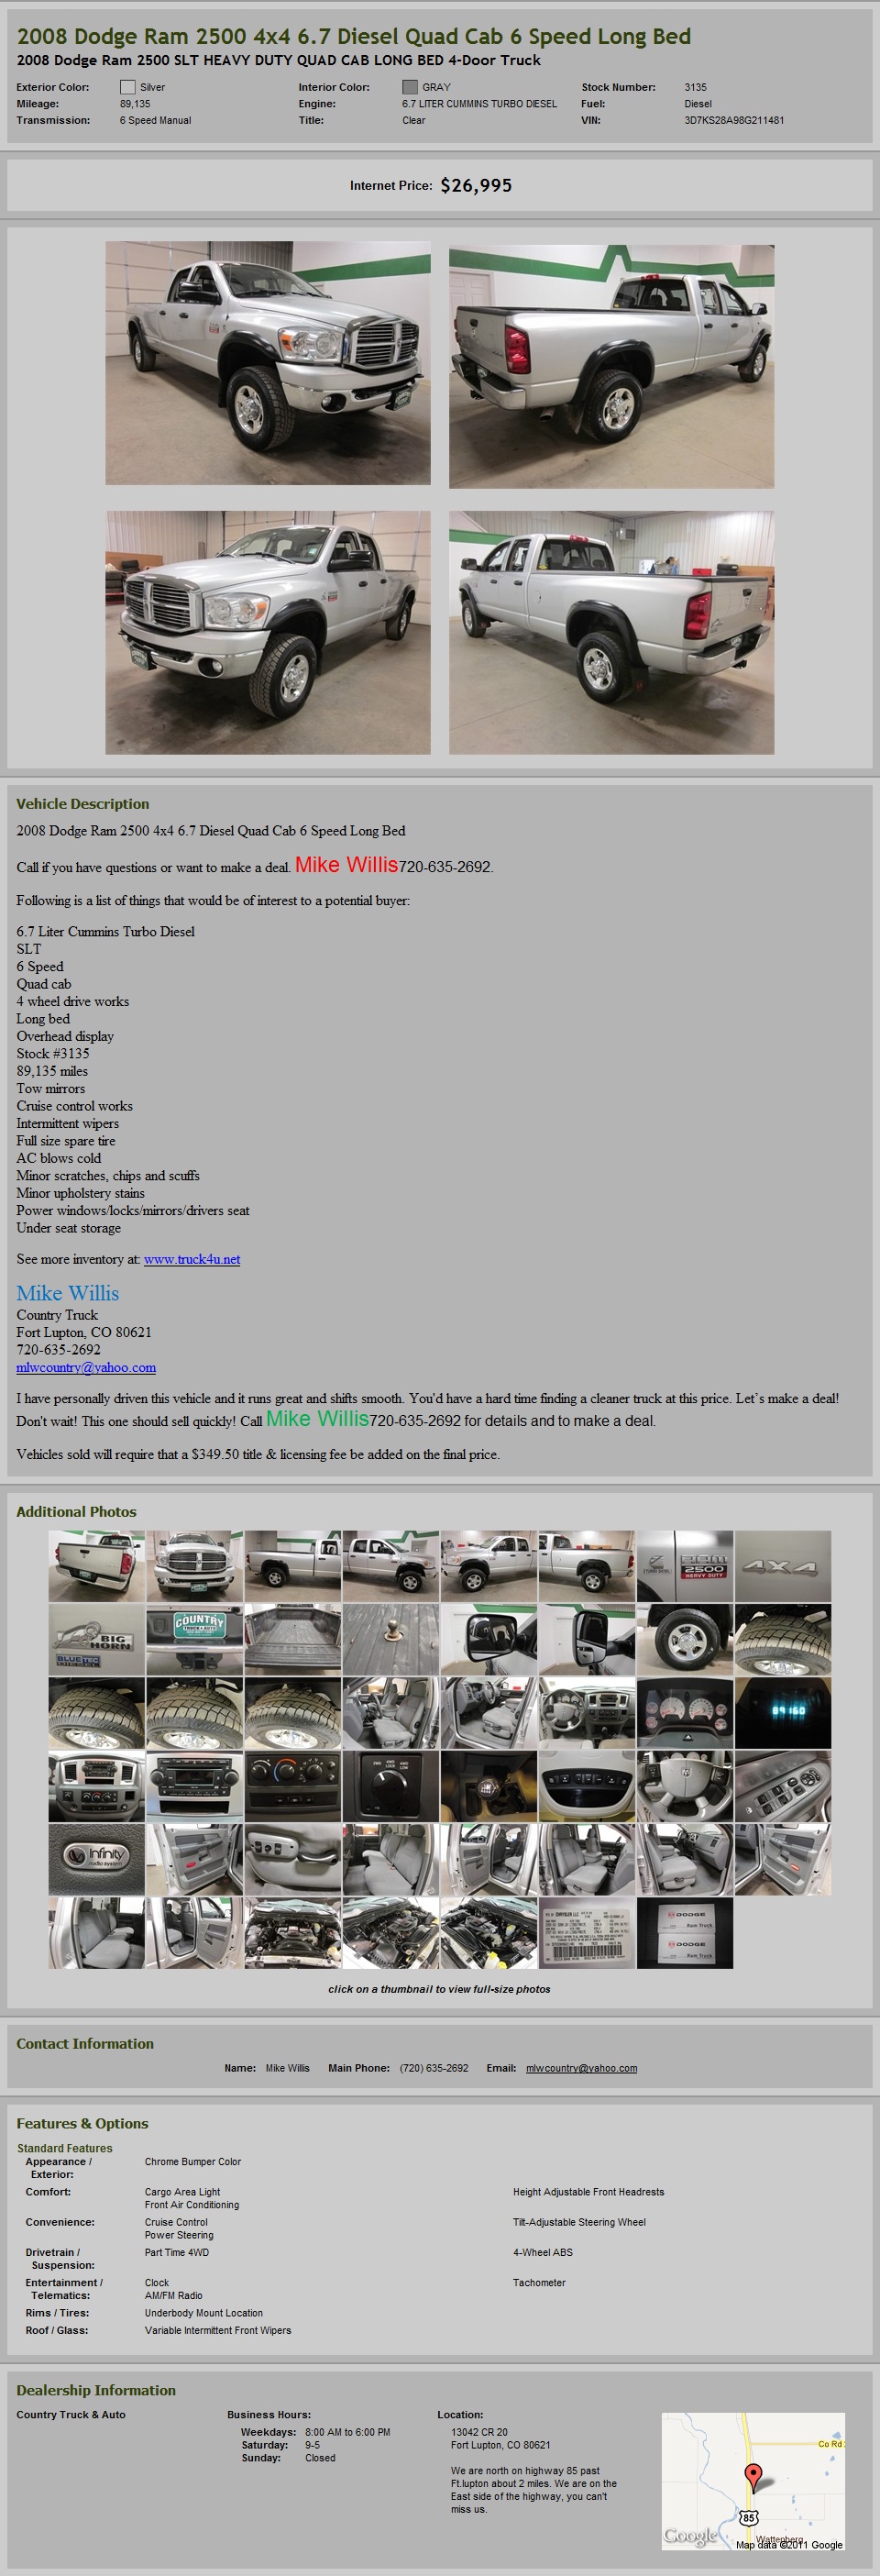 2008 Dodge Ram 2500 SLT HEAVY DUTY QUAD CAB LONG BED 4WD Silver exterior 4